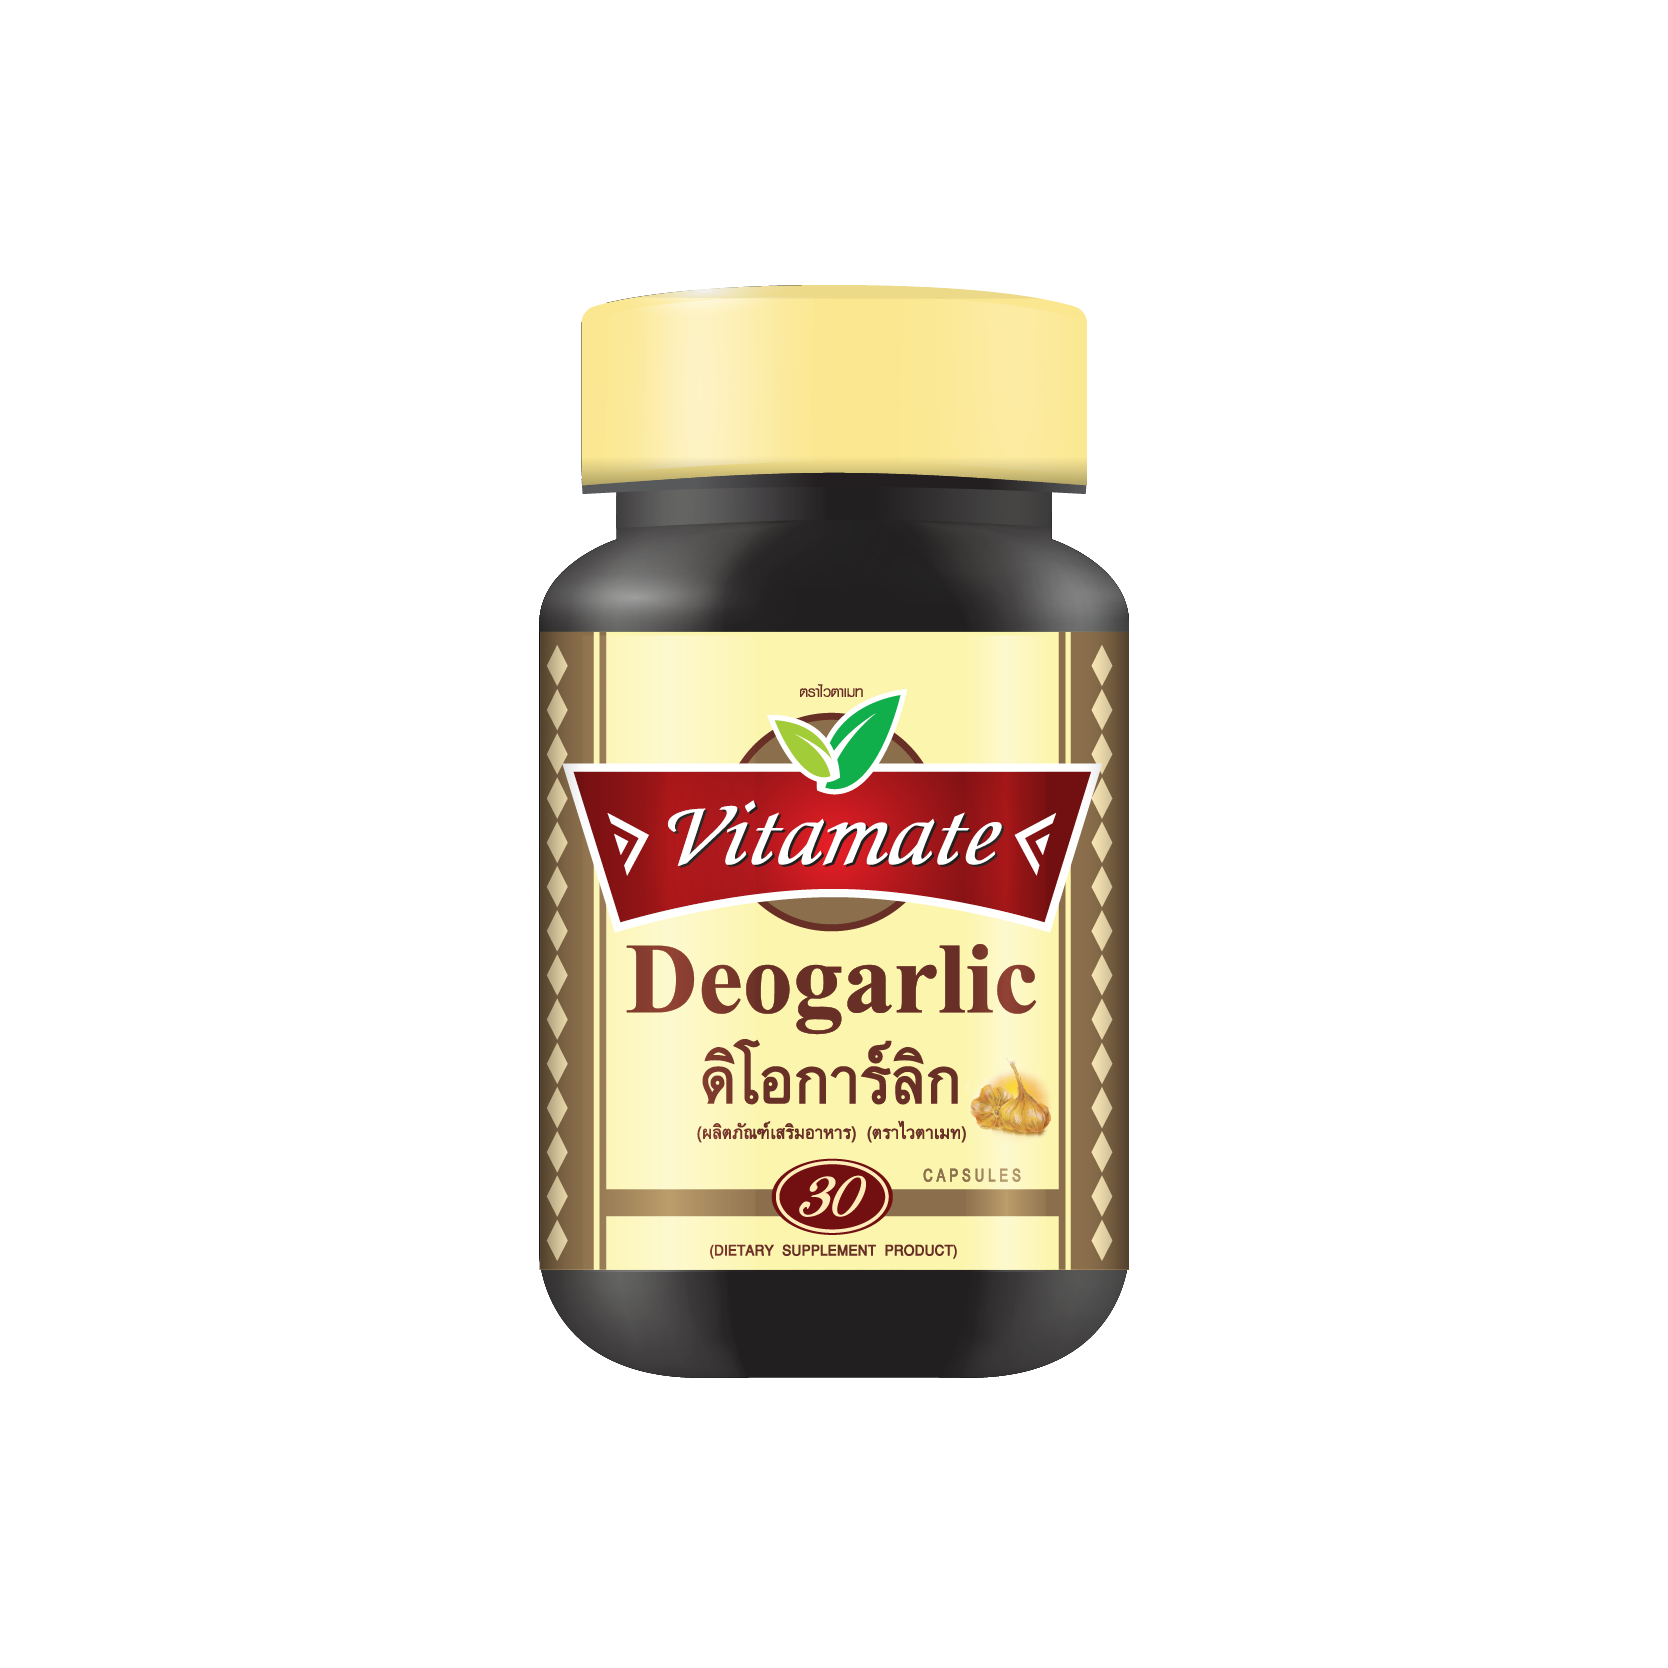 Vitamate Deogarlic